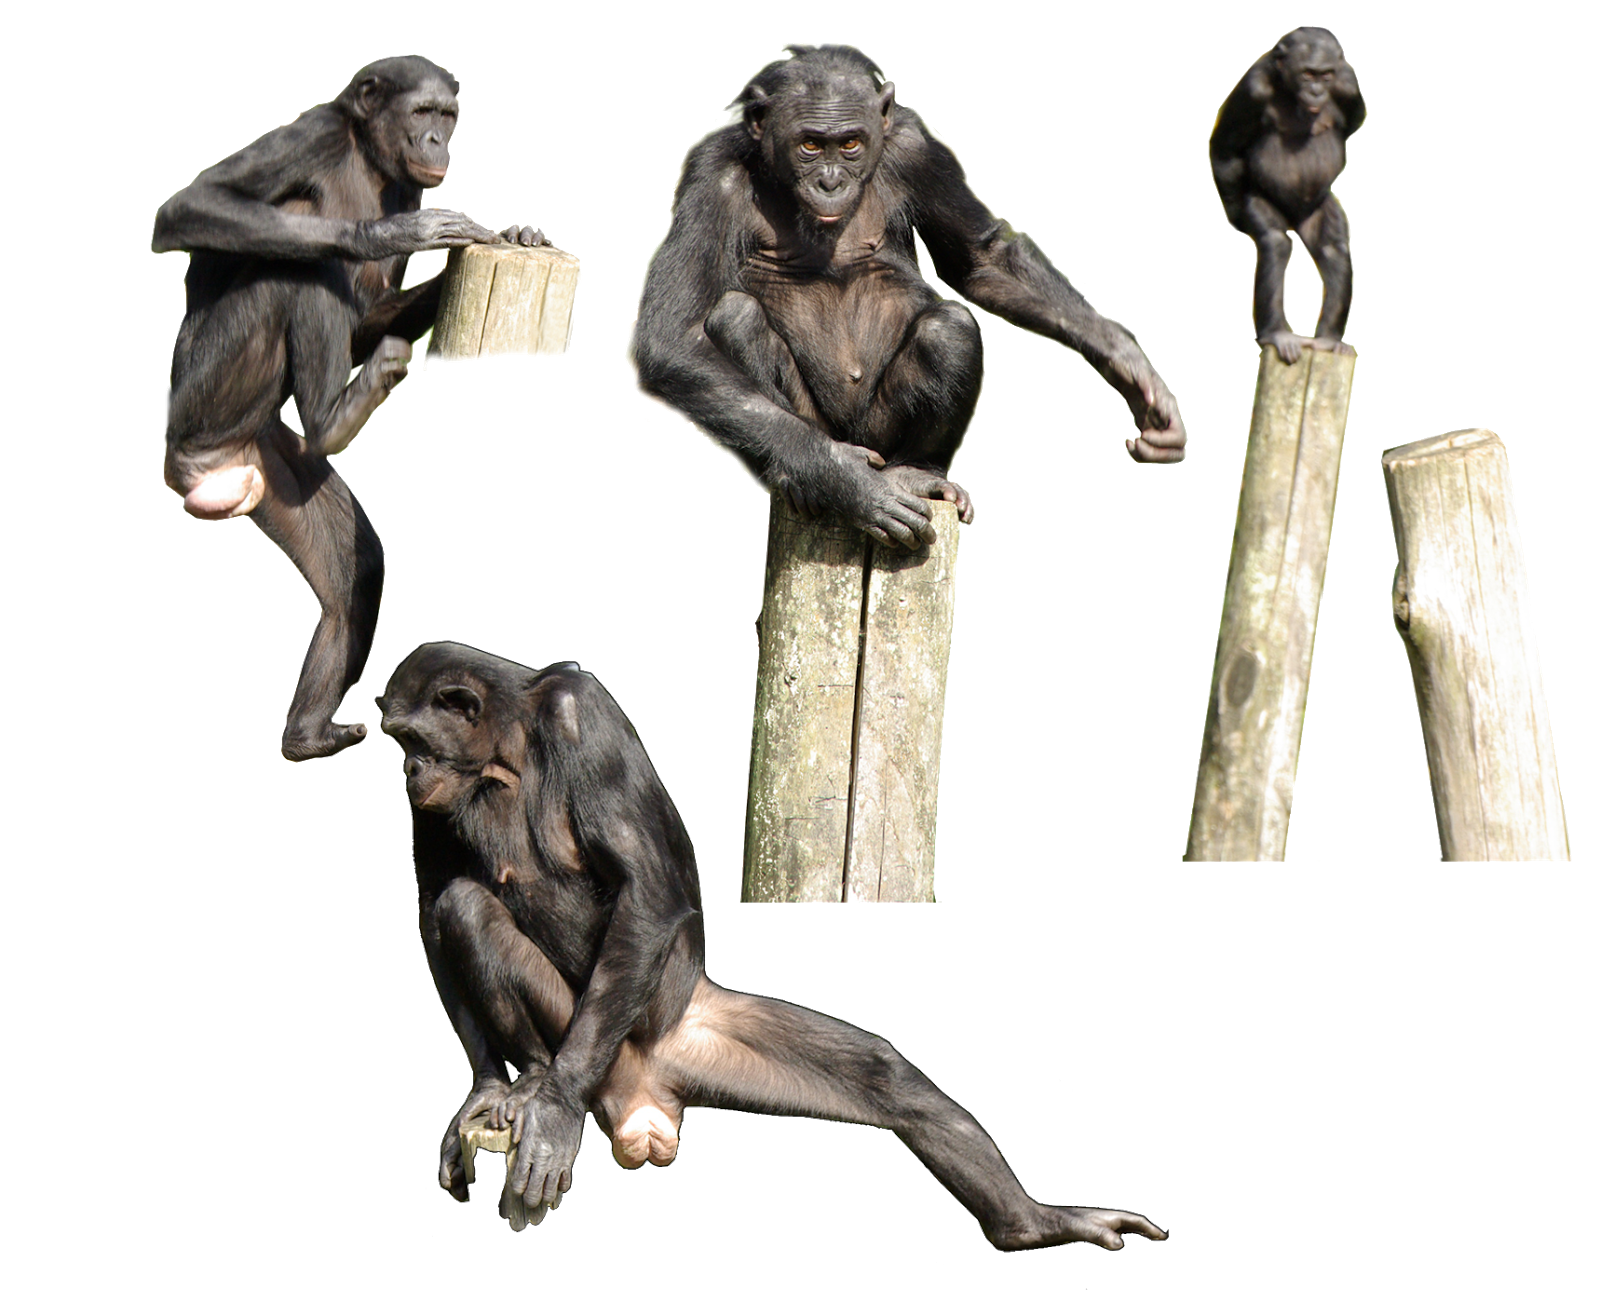 I, Bonobo